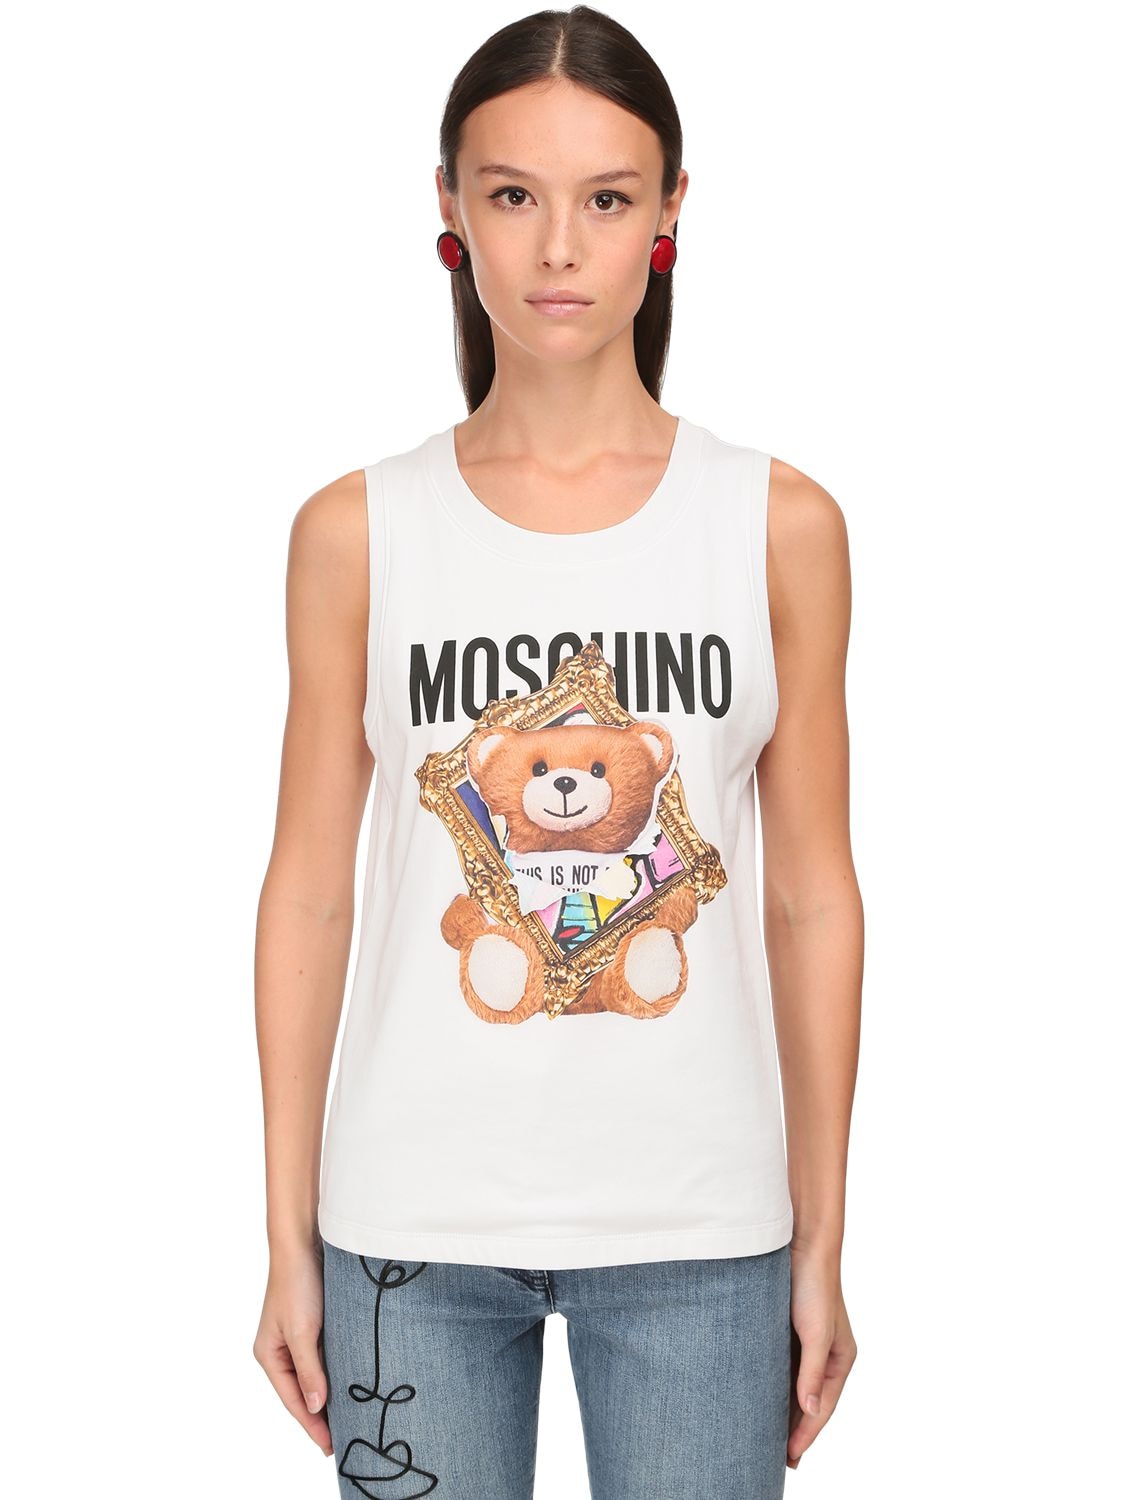 moschino vest top womens